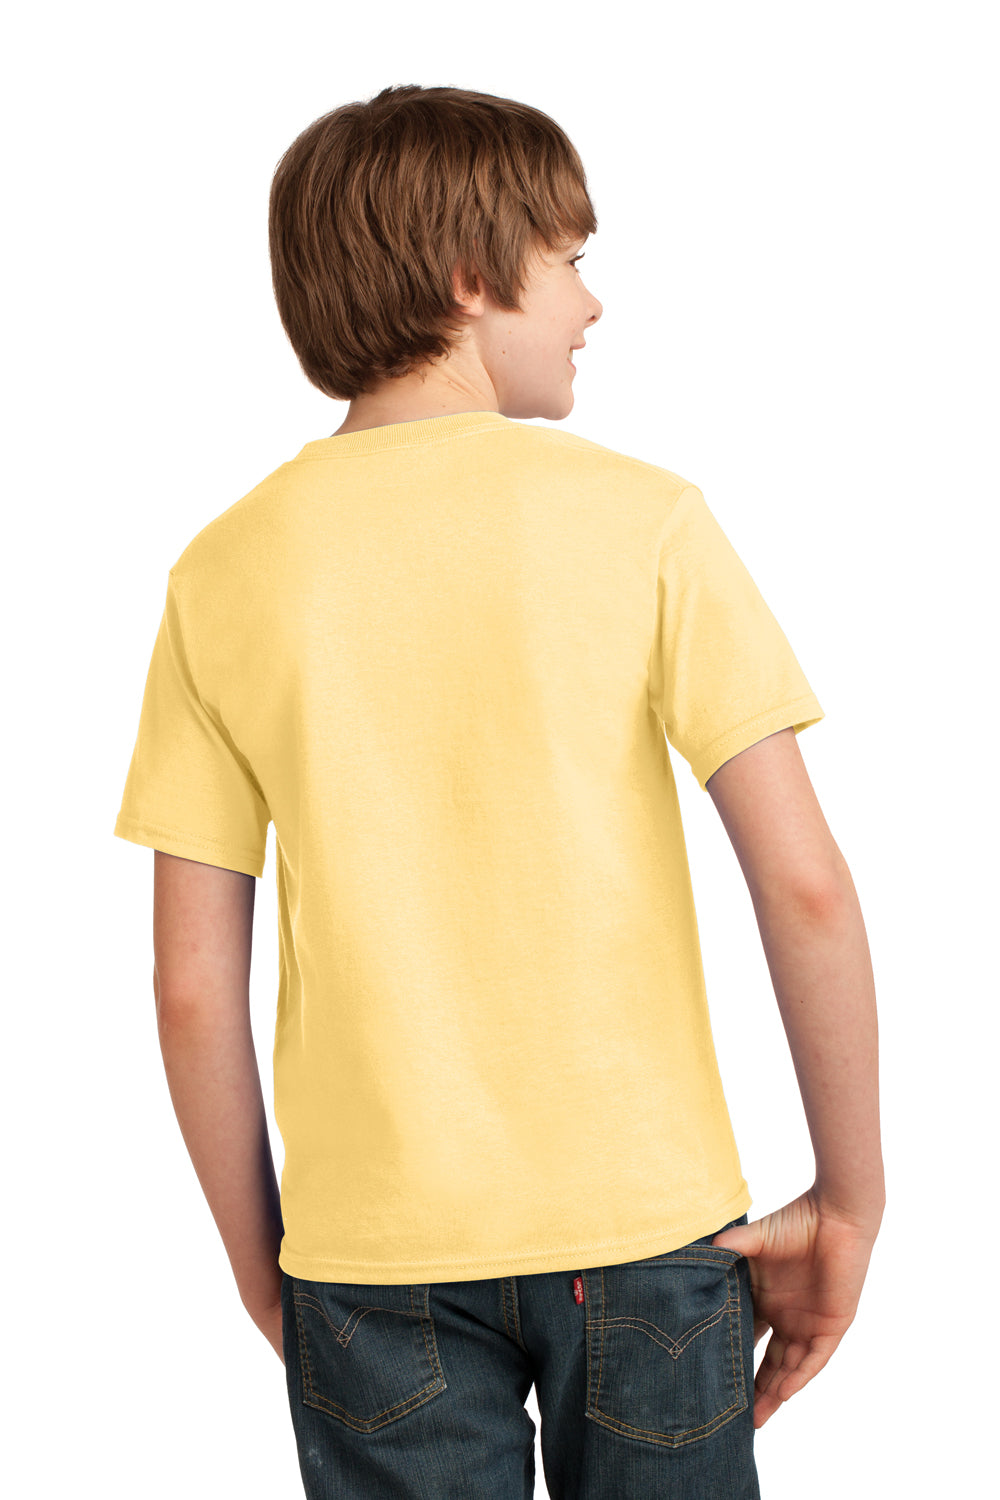 Port & Company PC61Y Youth Essential Short Sleeve Crewneck T-Shirt Daffodil Yellow Back